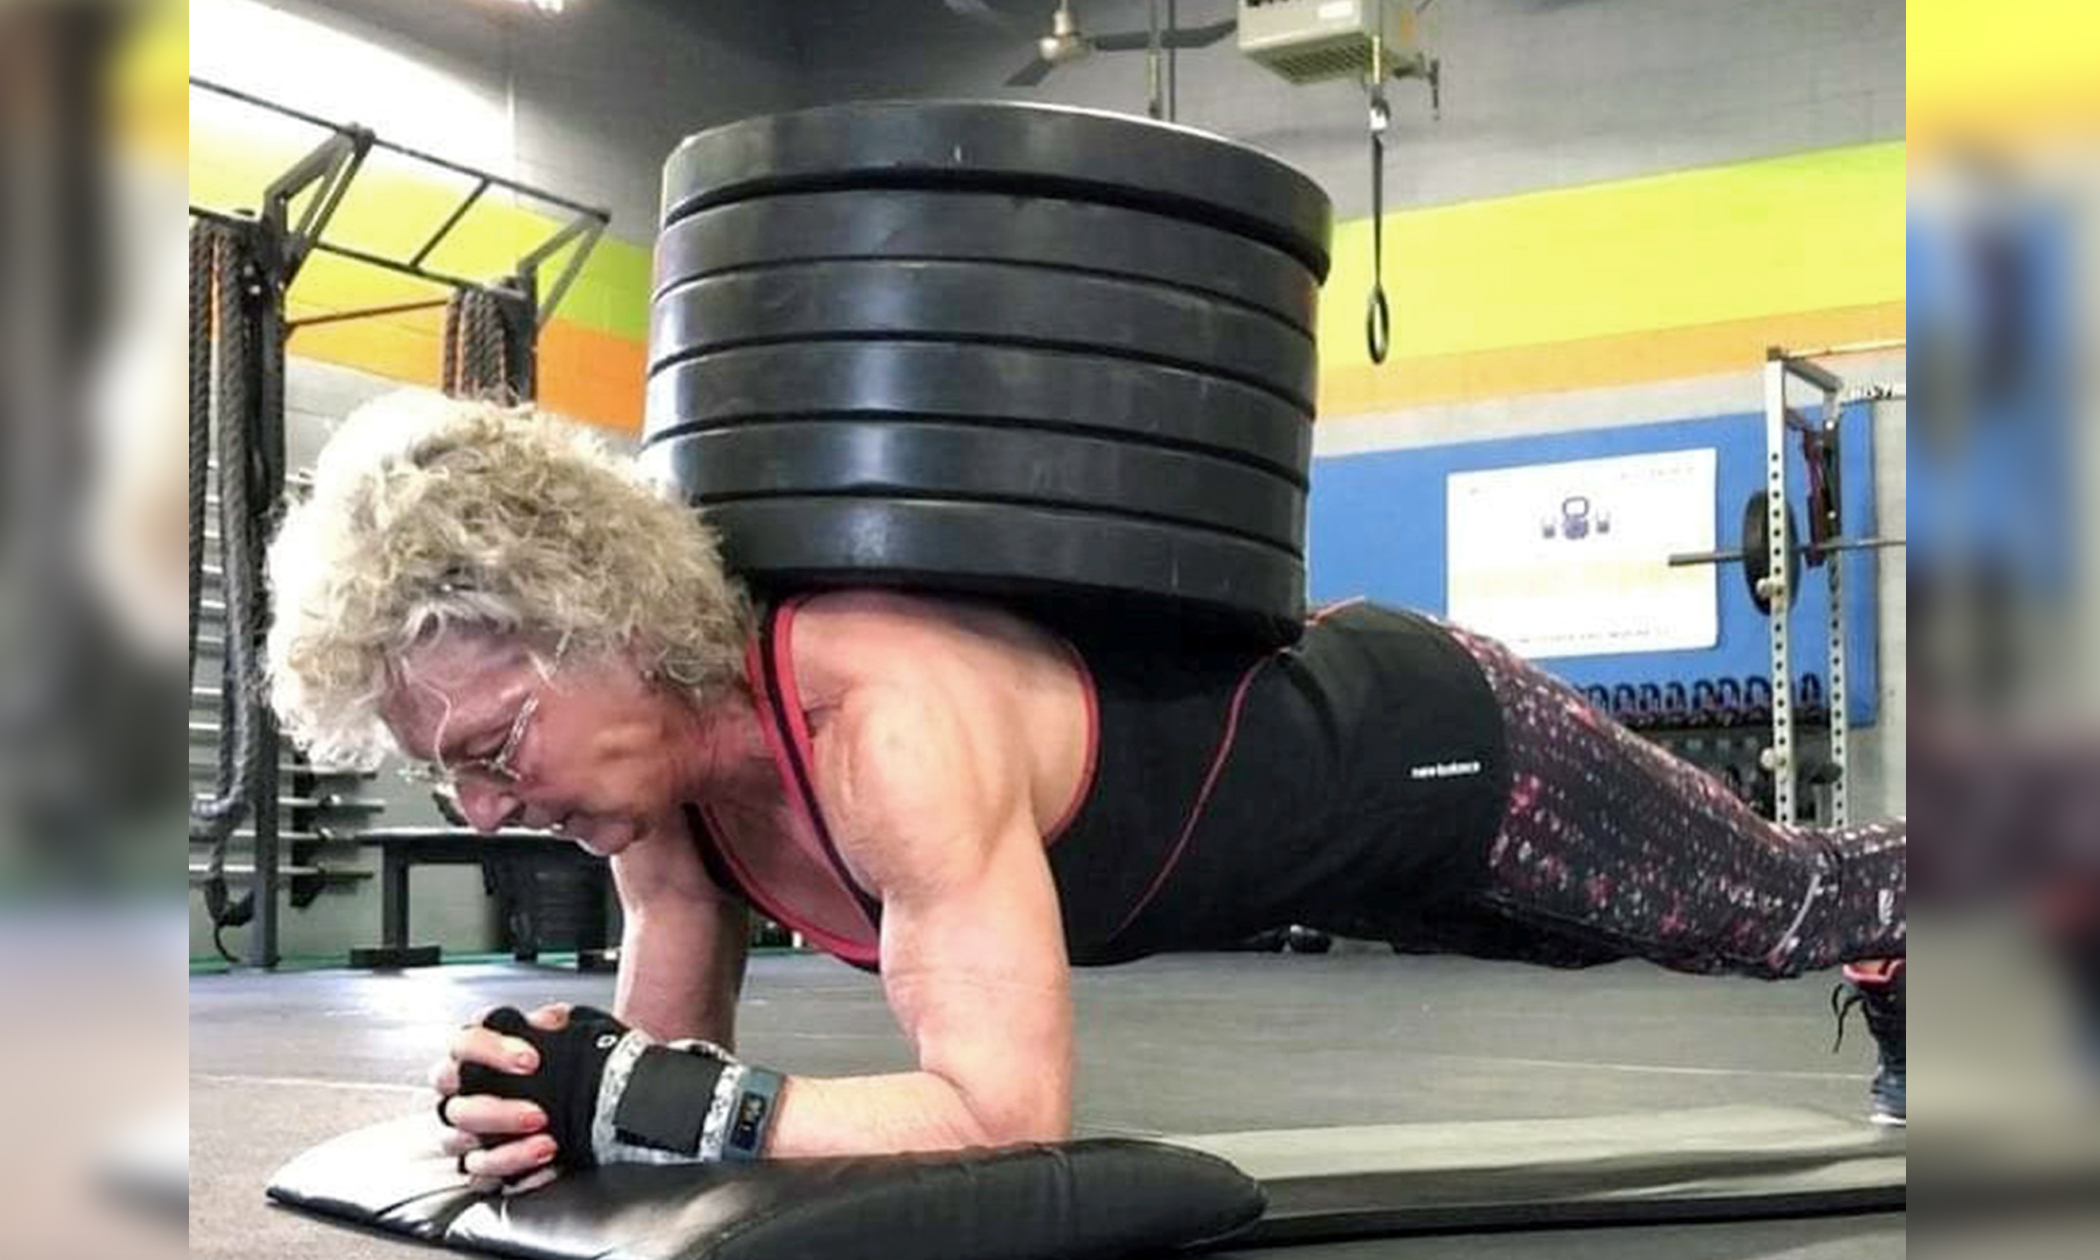 Grandma becomes a champion bodybuilder at 70